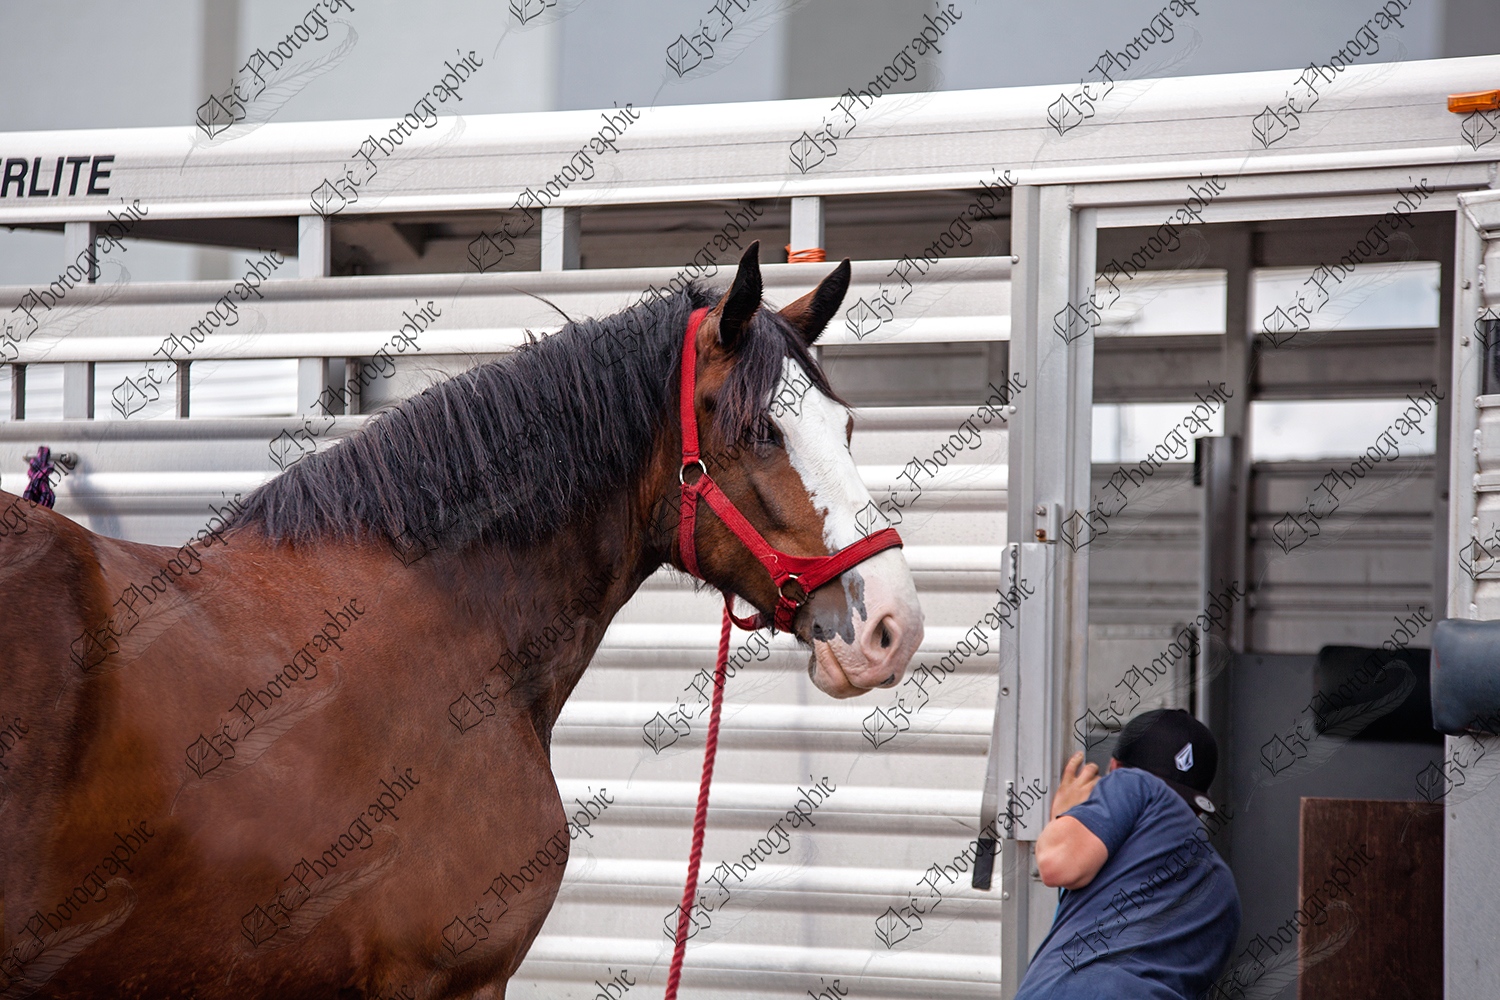 elze_photo_6586_remorque_cheval_shire_horse_trailer_man